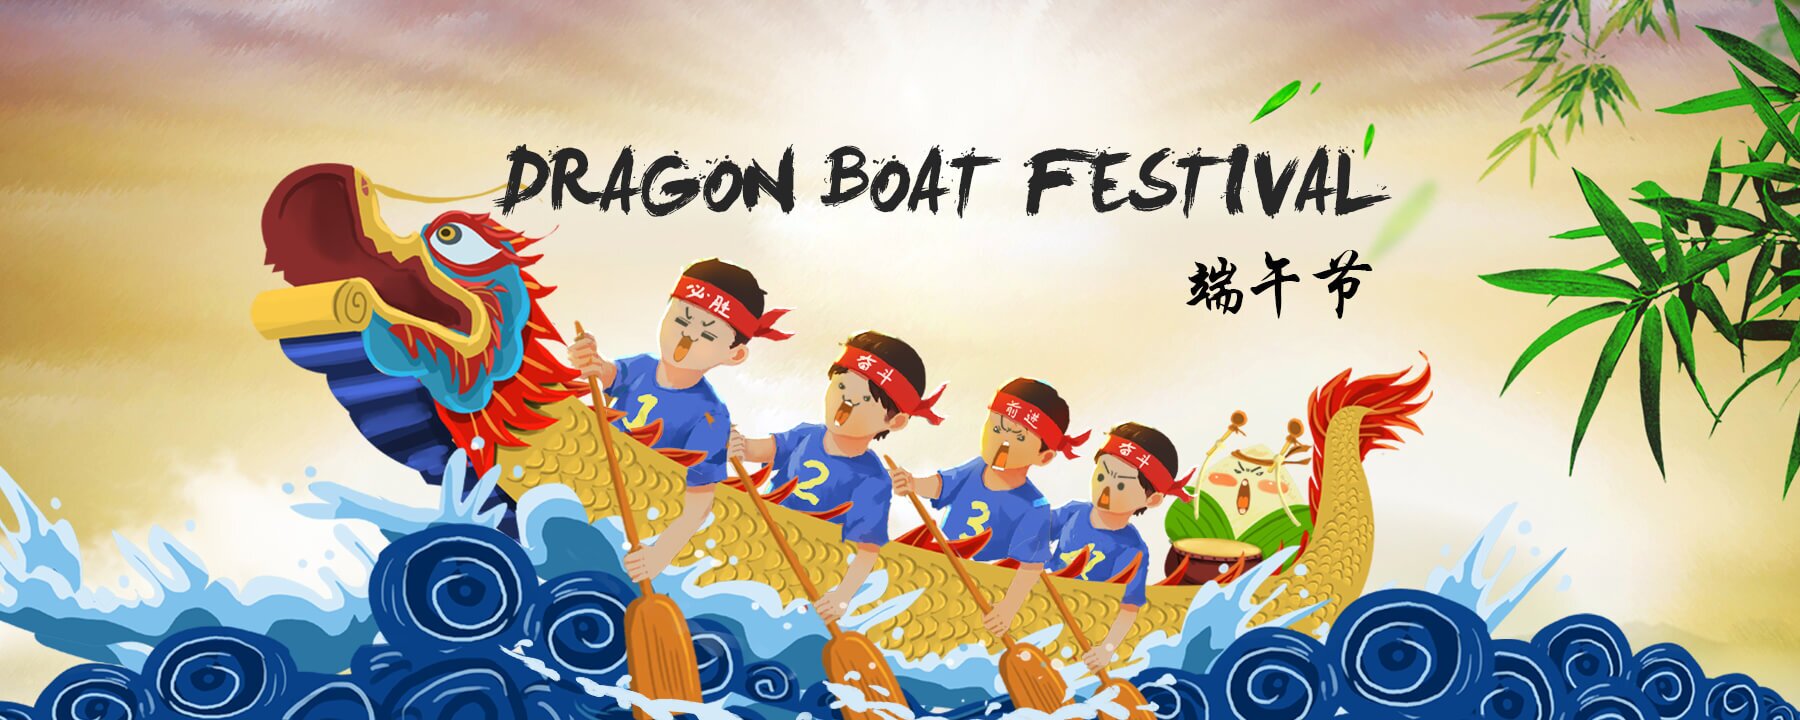 dragon-boat-banner.jpg